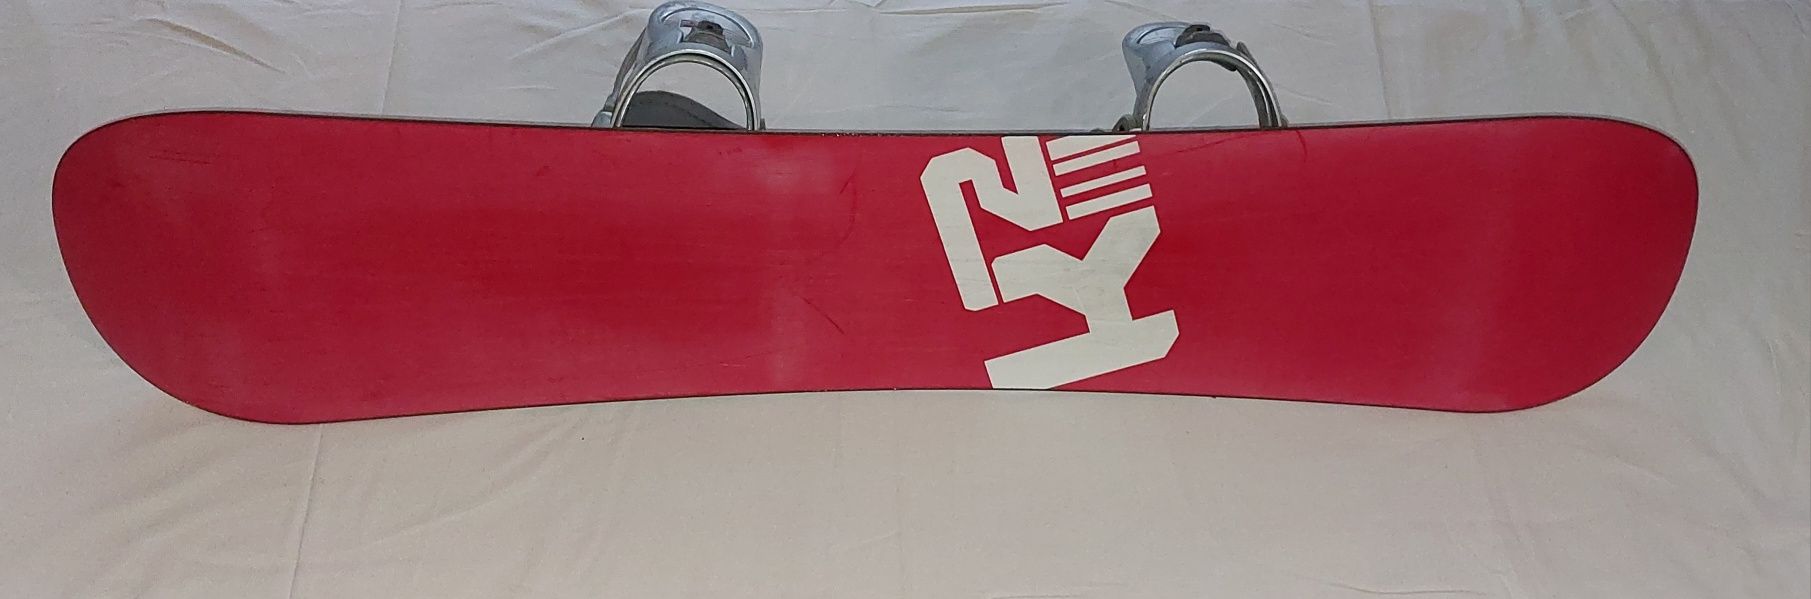 Deska k2 snowboard 130cm